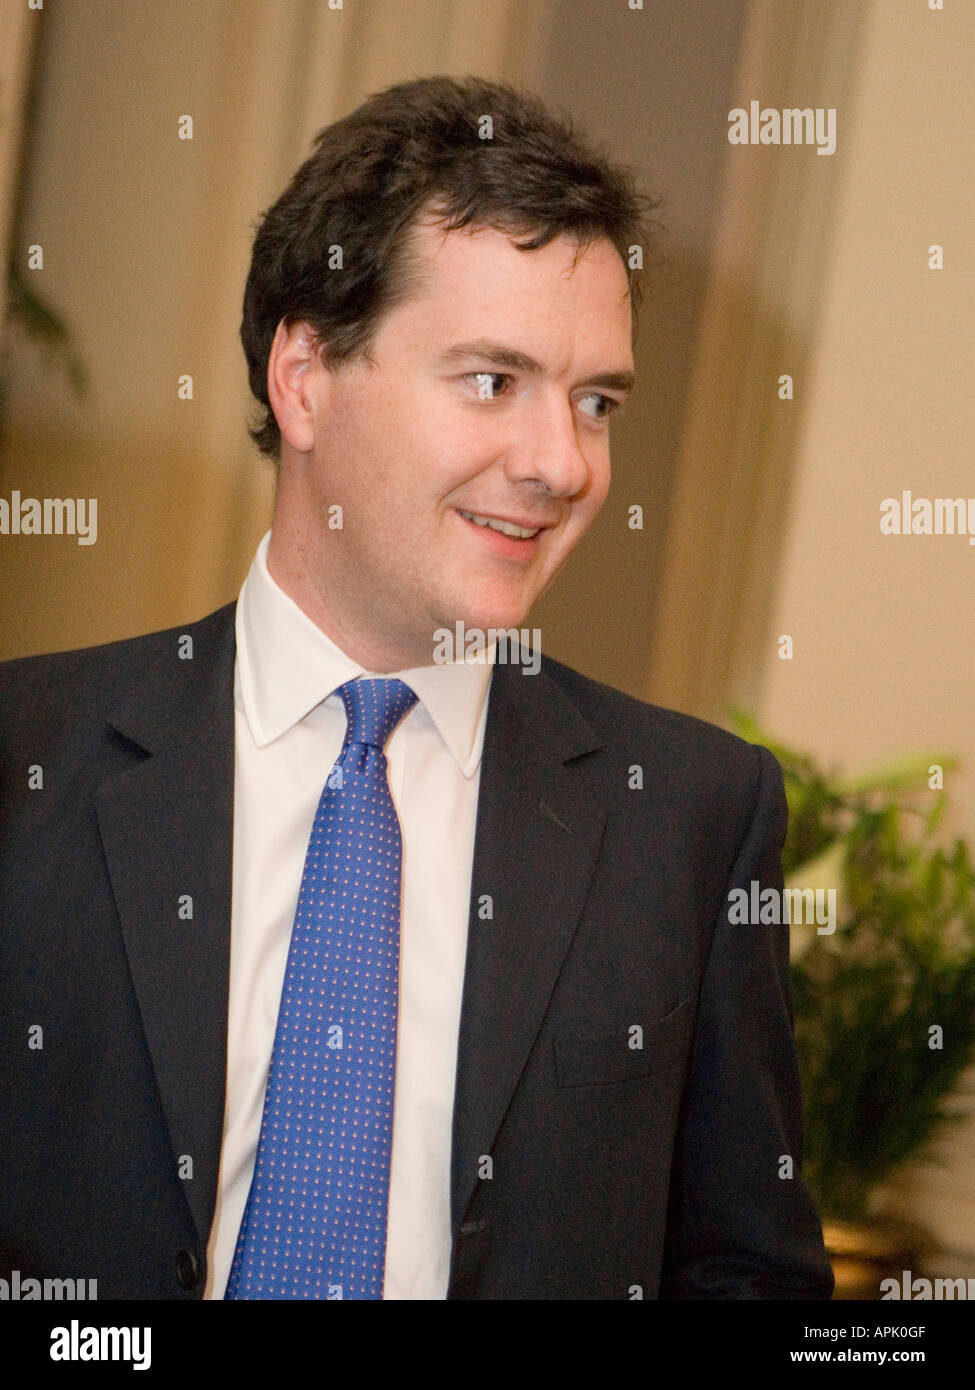 Die richtige Honorable George Osborne MP Kanzler des Finanzministeriums Stockfoto